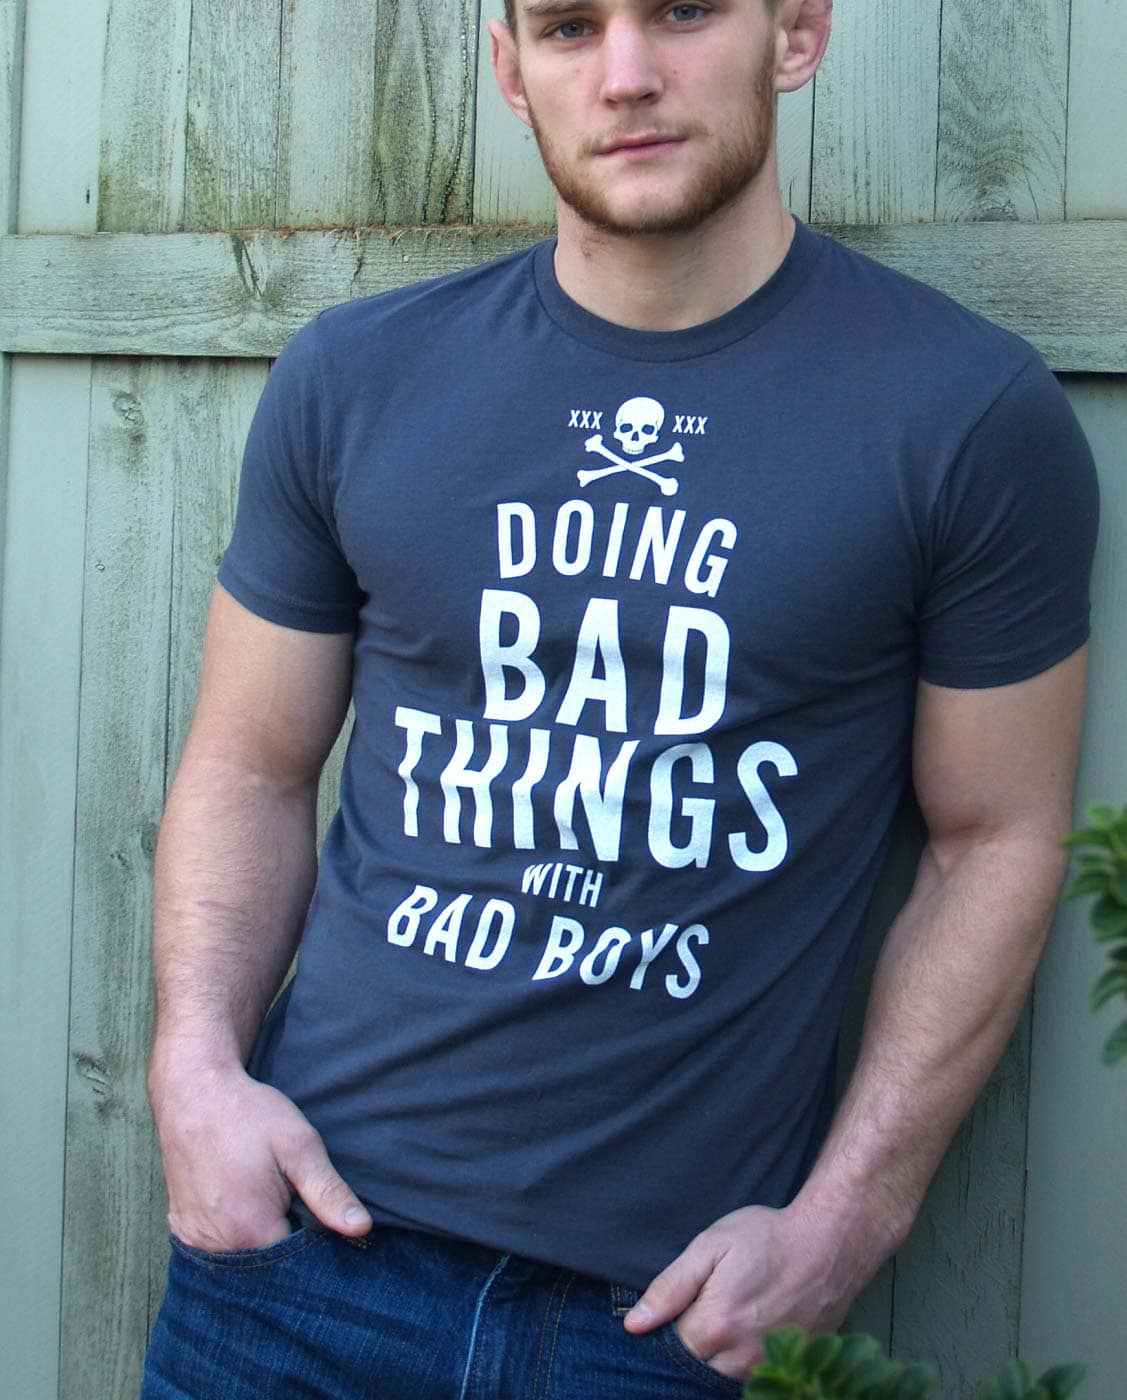 Ajaxx63 Doing Bad Things Men's T-Shirt